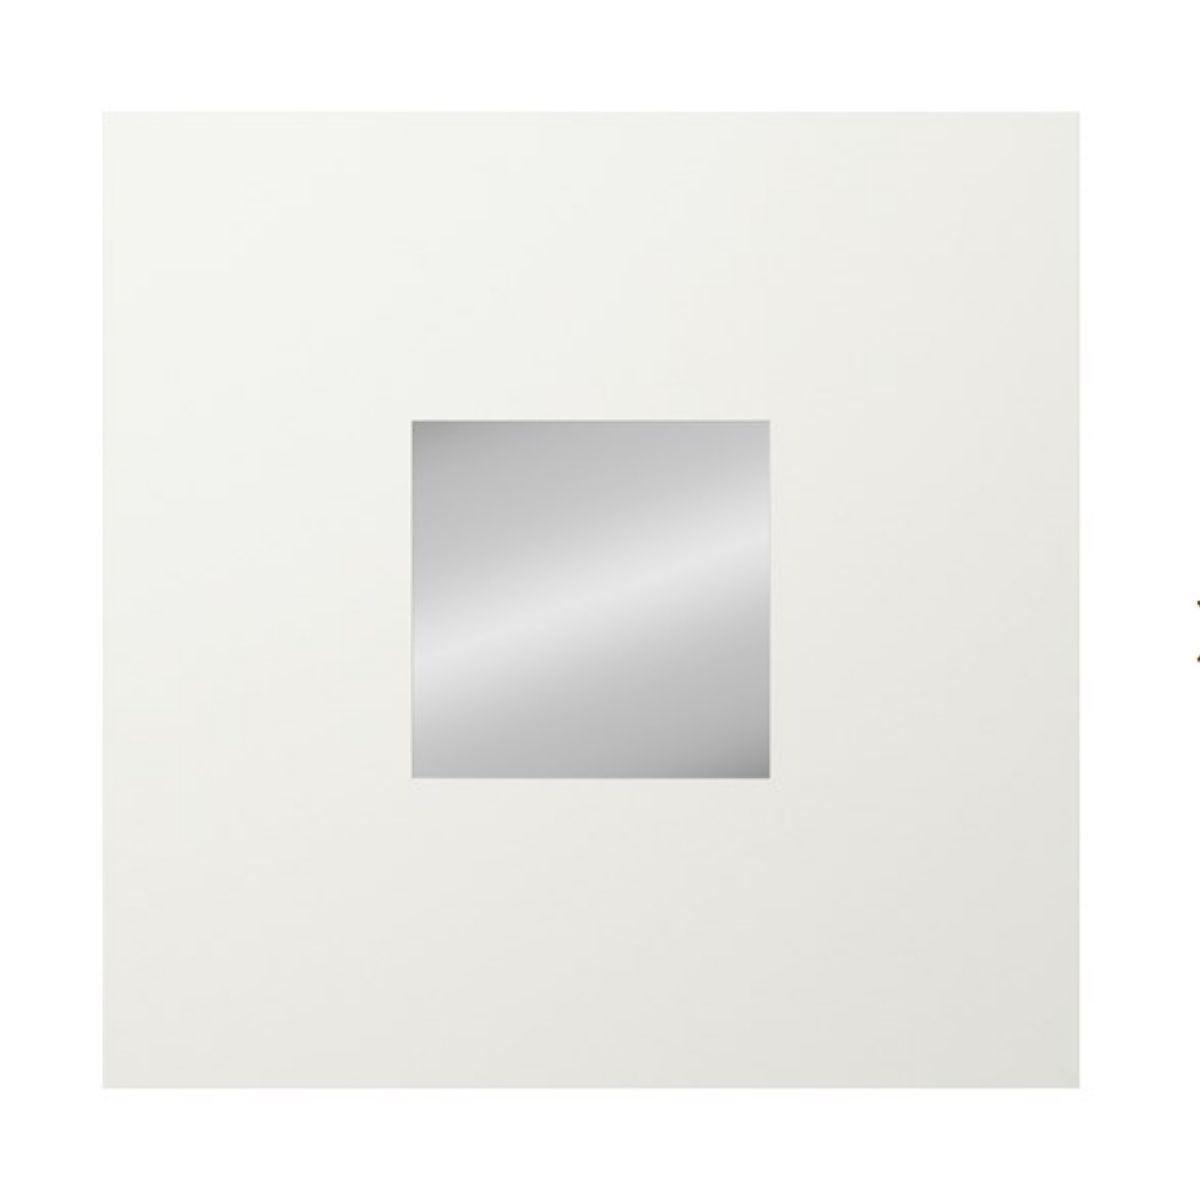 Base - White Mirror - 26x26cm